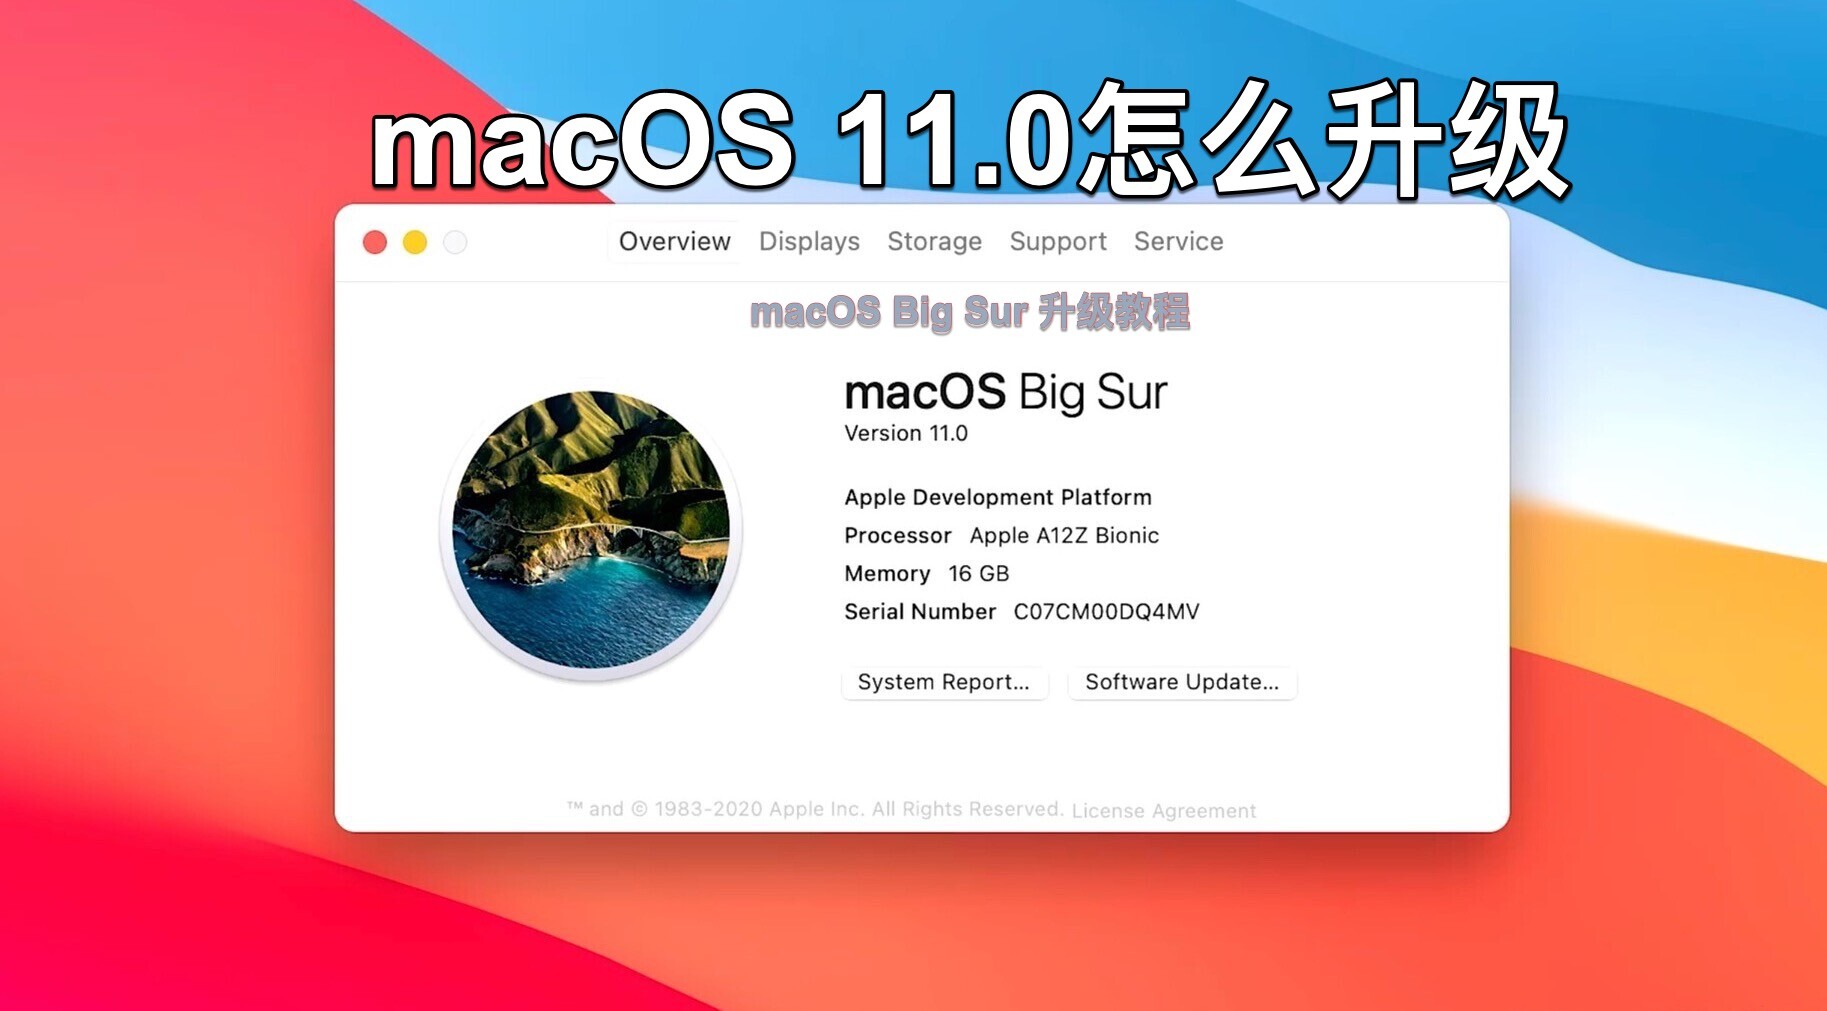 macOS 11.0怎么升级？macOS Big Sur 升级教程